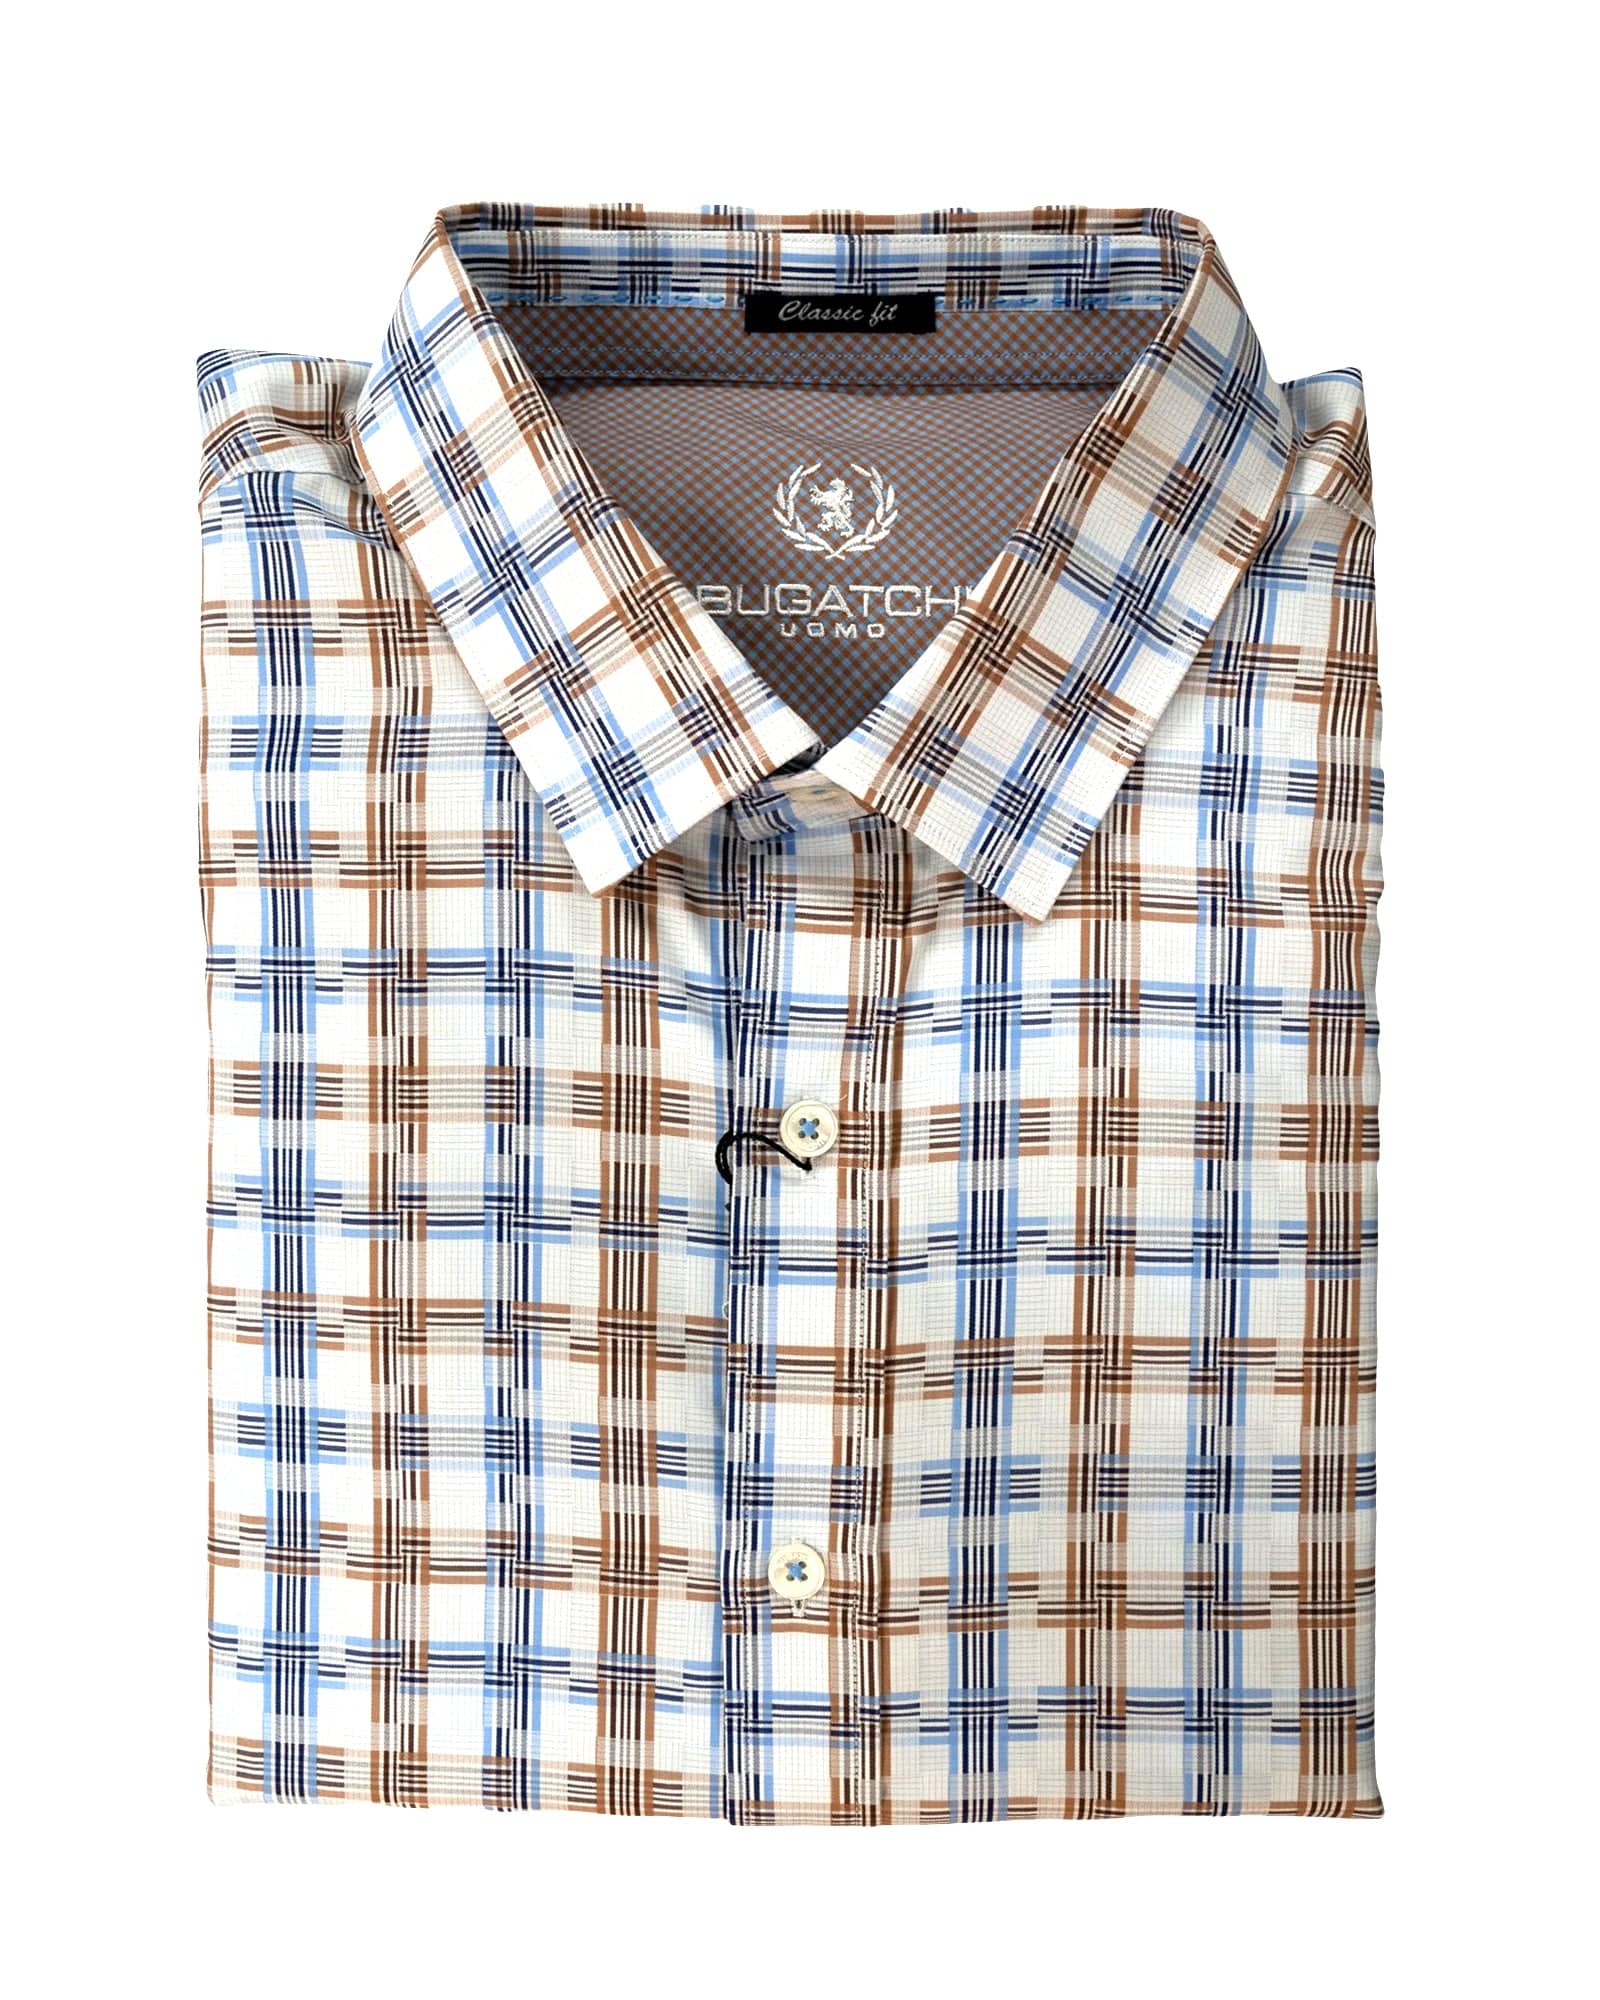 Bugatchi Sand & Blue Check Sport Shirt - Rainwater's Men's Clothing and Tuxedo Rental